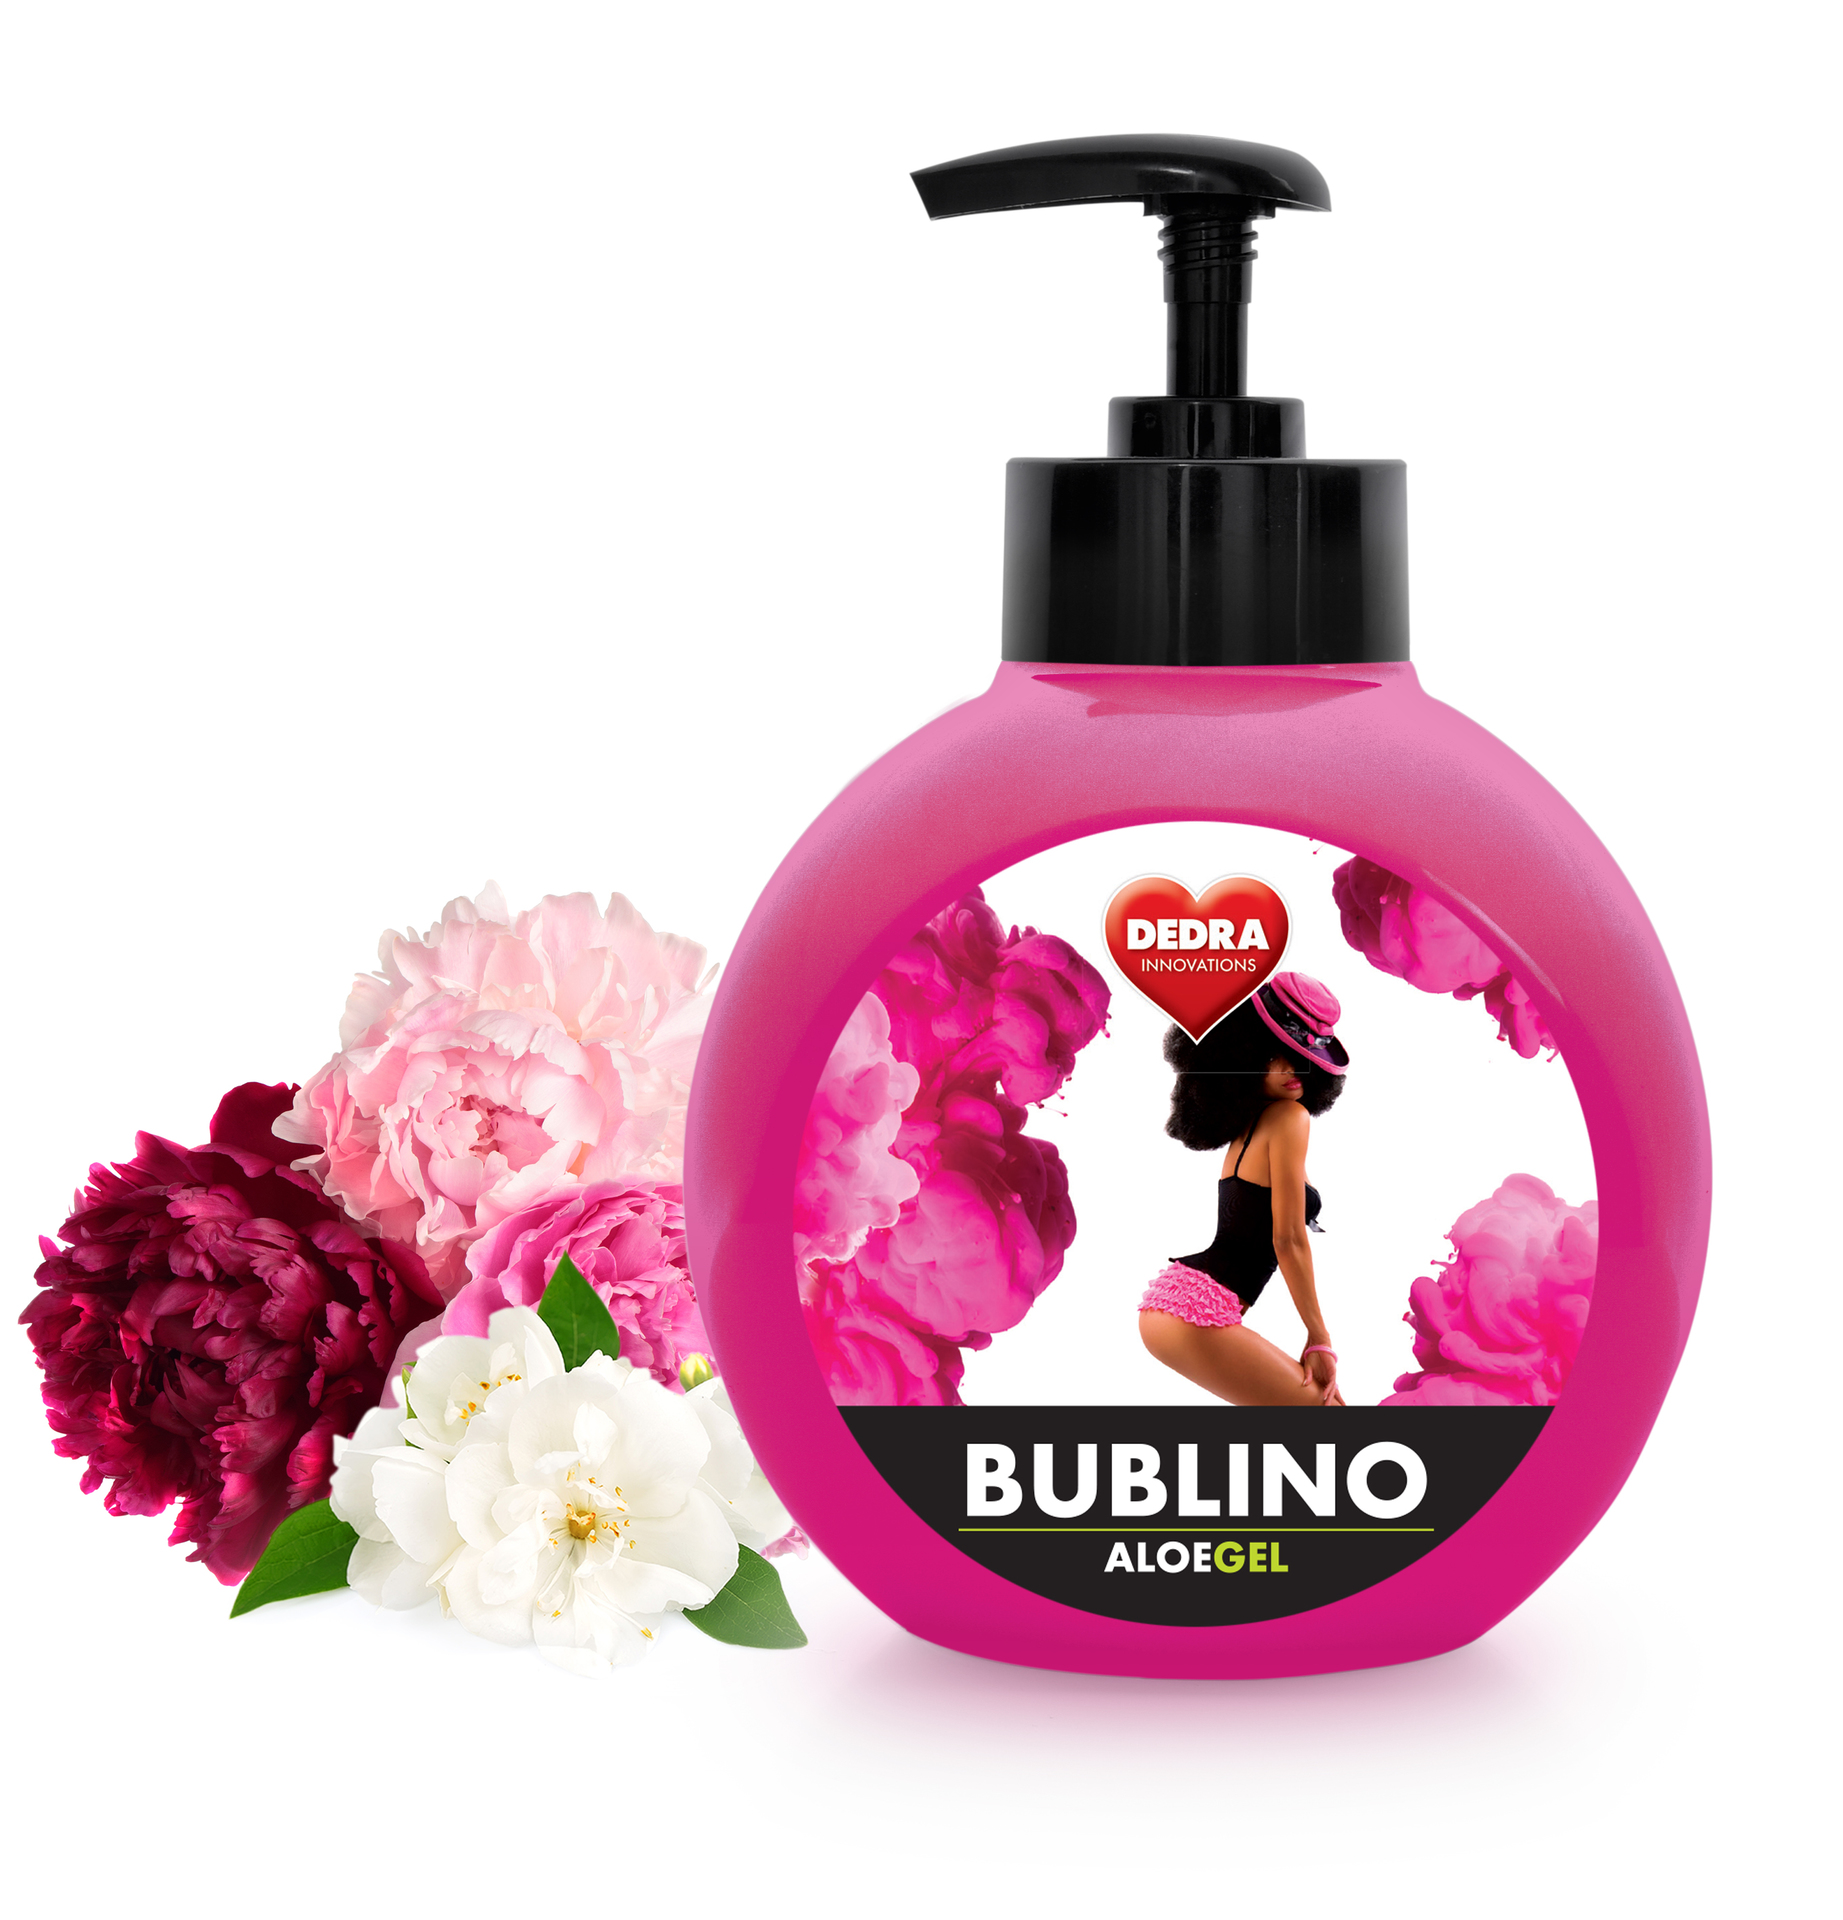 Dera Bublino Saison parfum, tekuté mýdlo na tělo a ruce, s pumpičkou